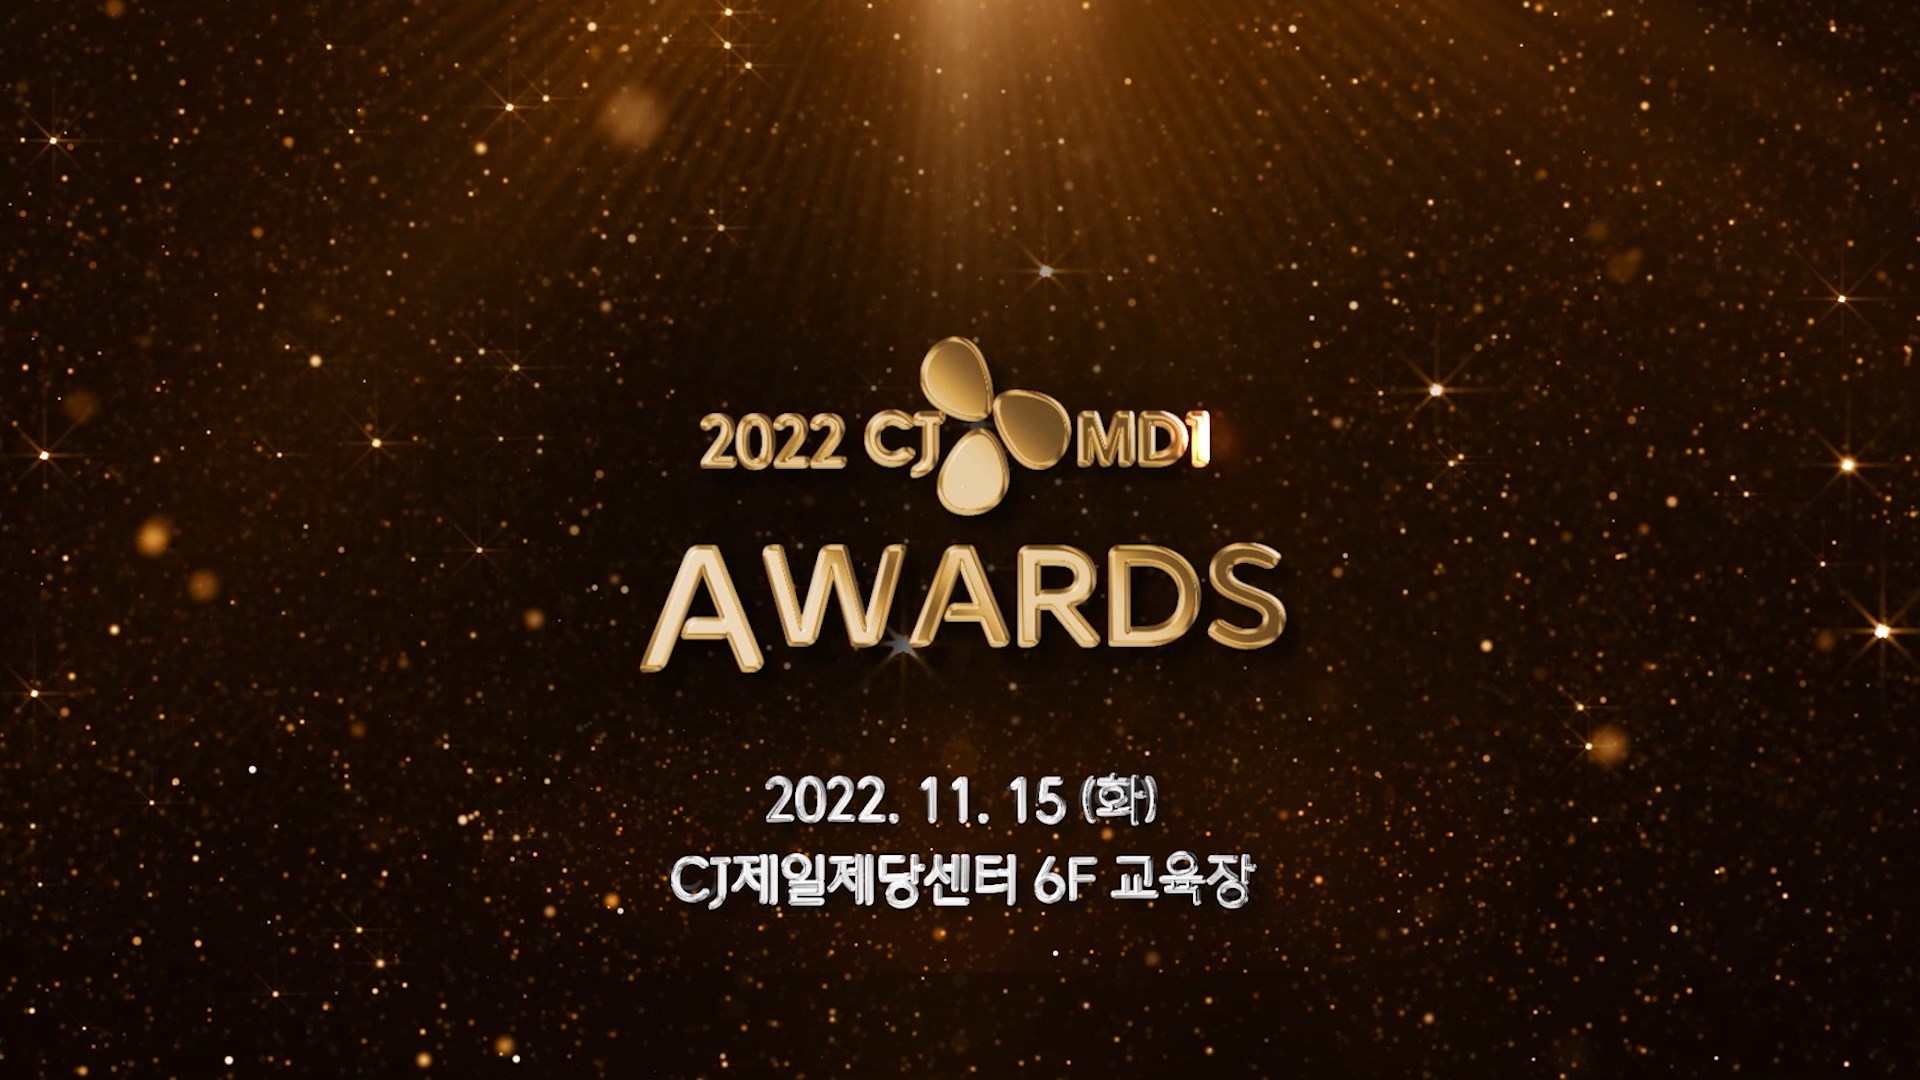 2022 CJ MD1 Awards 